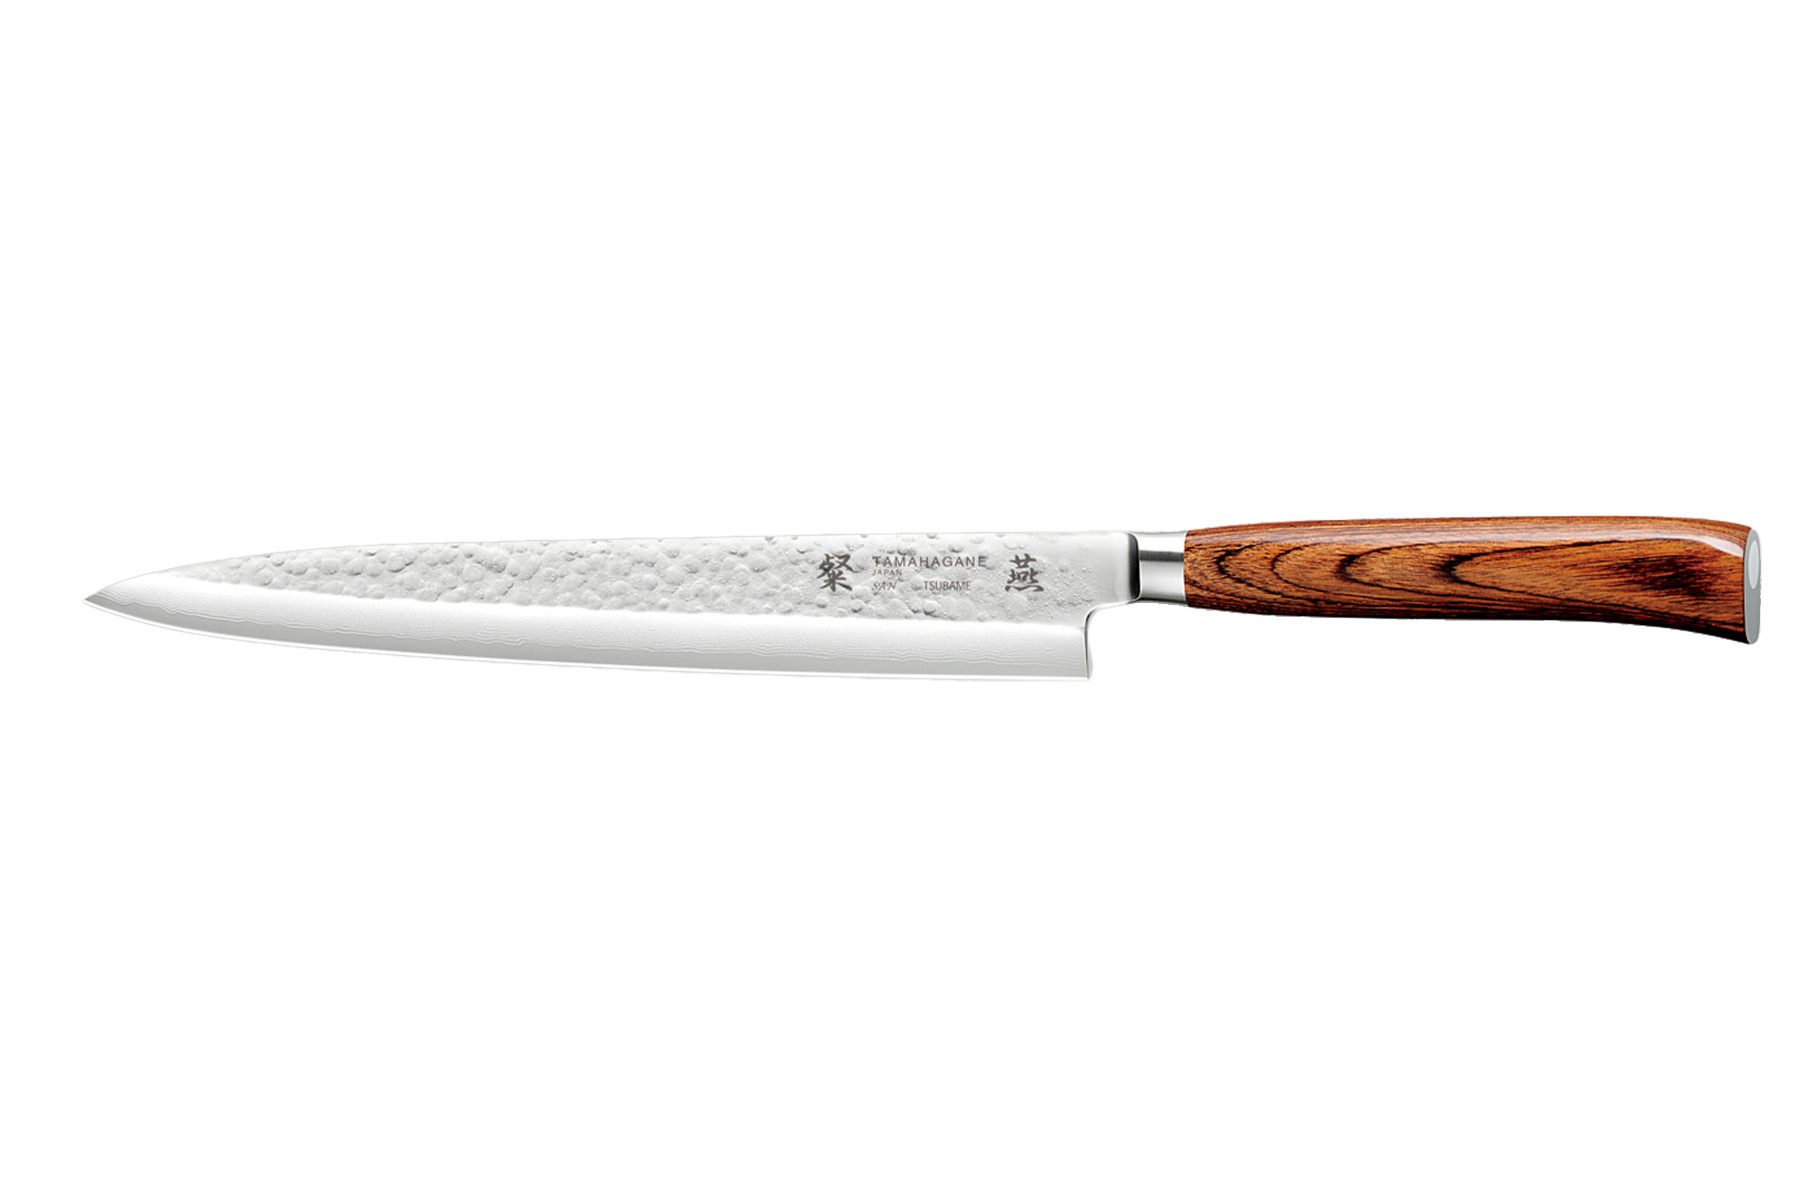 Couteau japonais Tamahagane Tsubame pakkawood - couteau sashimi 24 cm